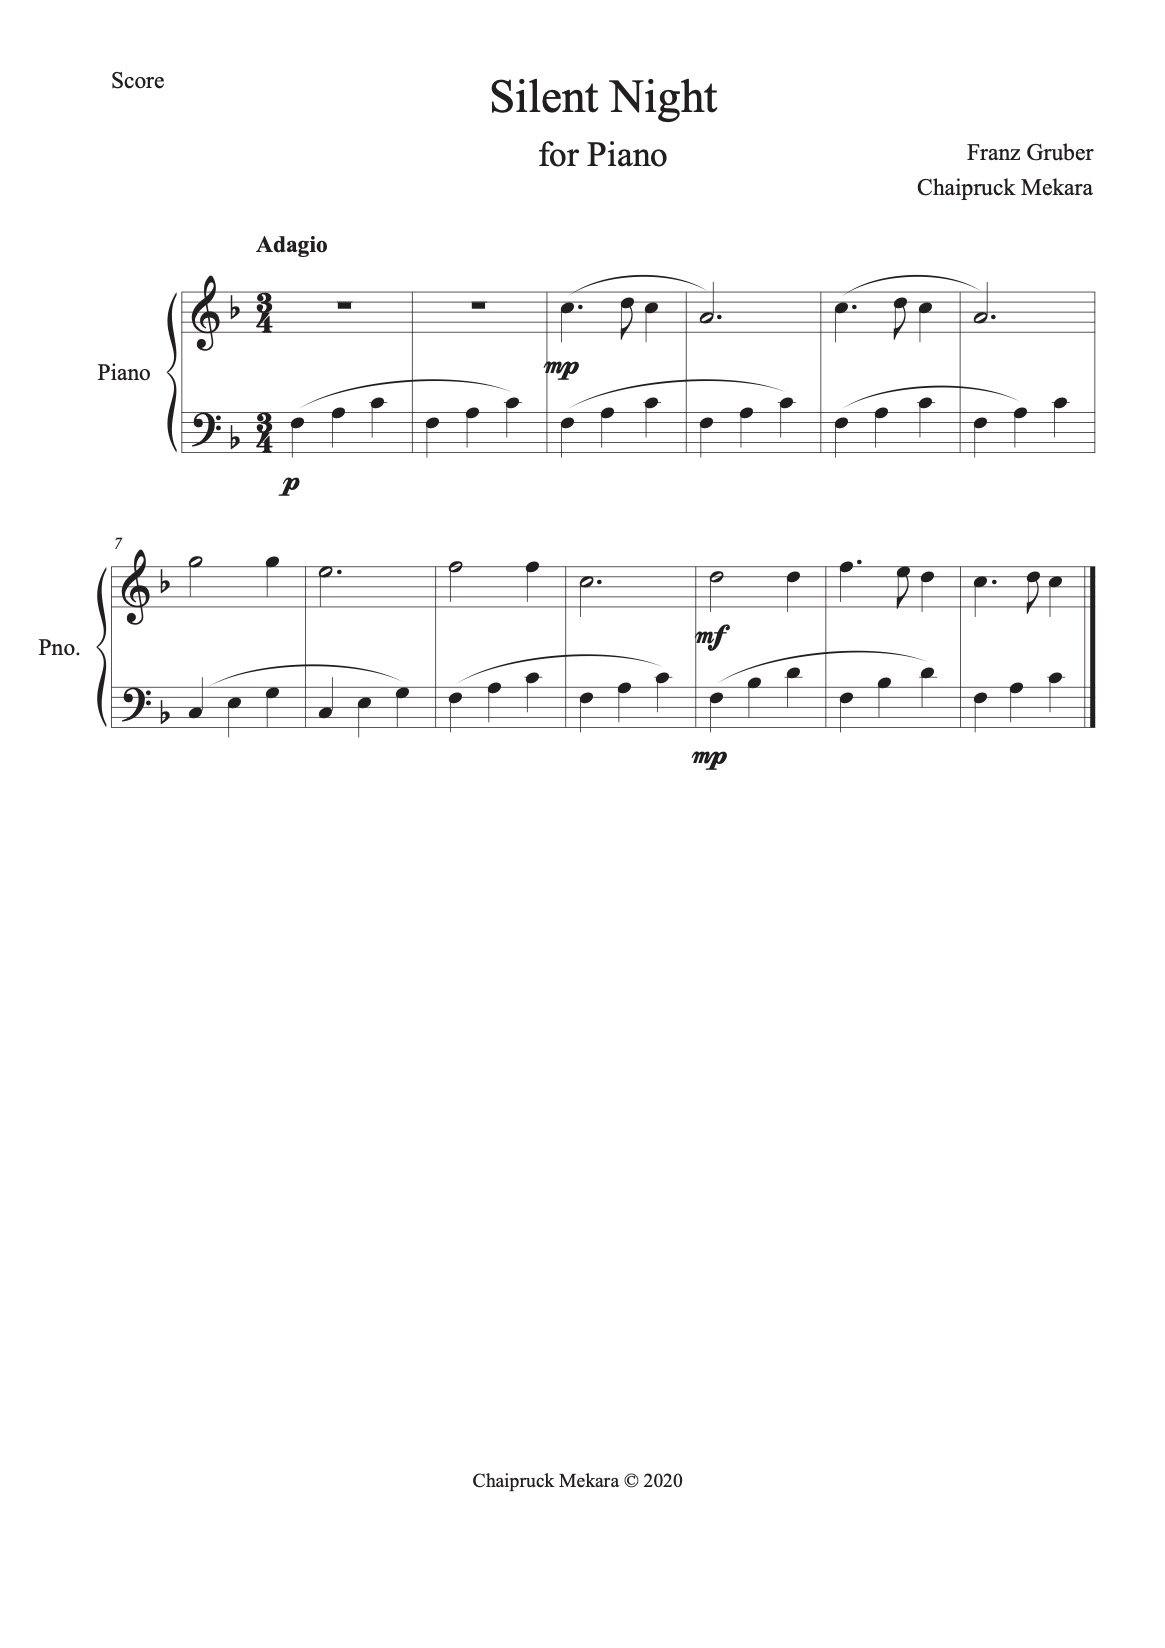 Piano solo sheet music: Silent Night - ChaipruckMekara